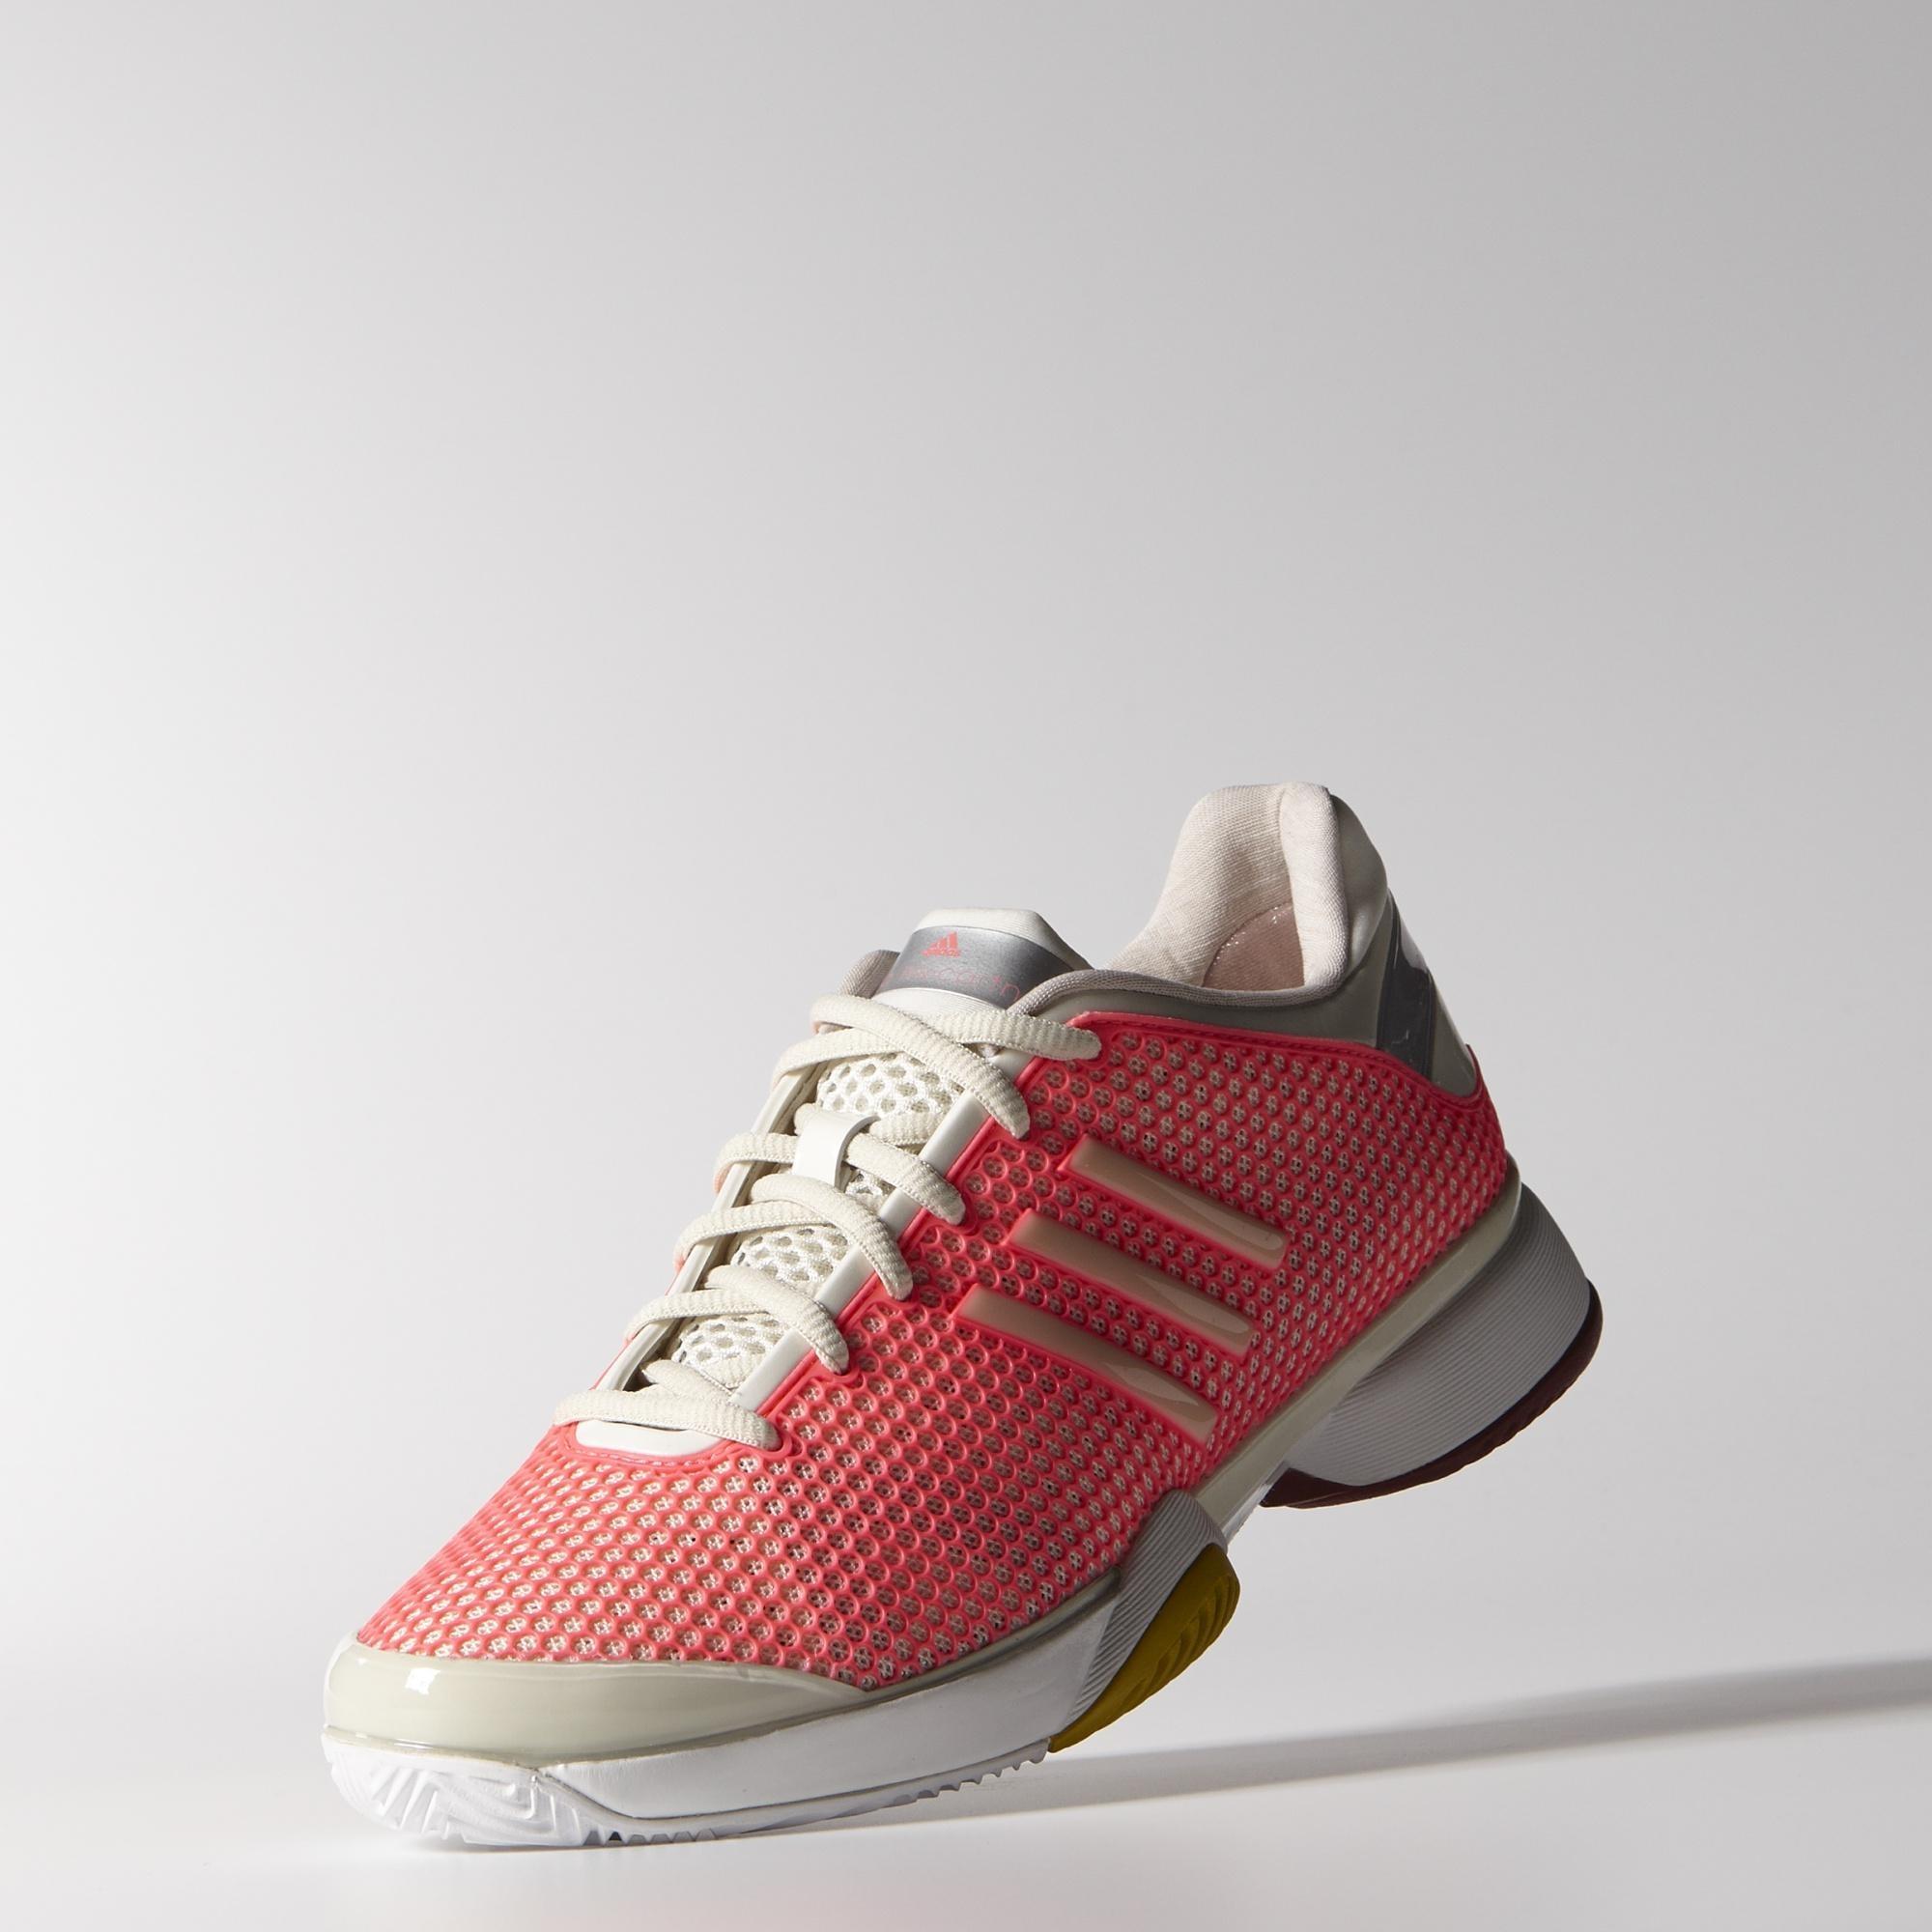 Adidas Womens Stella McCartney Barricade 8 Tennis Shoes - Pink/White ...